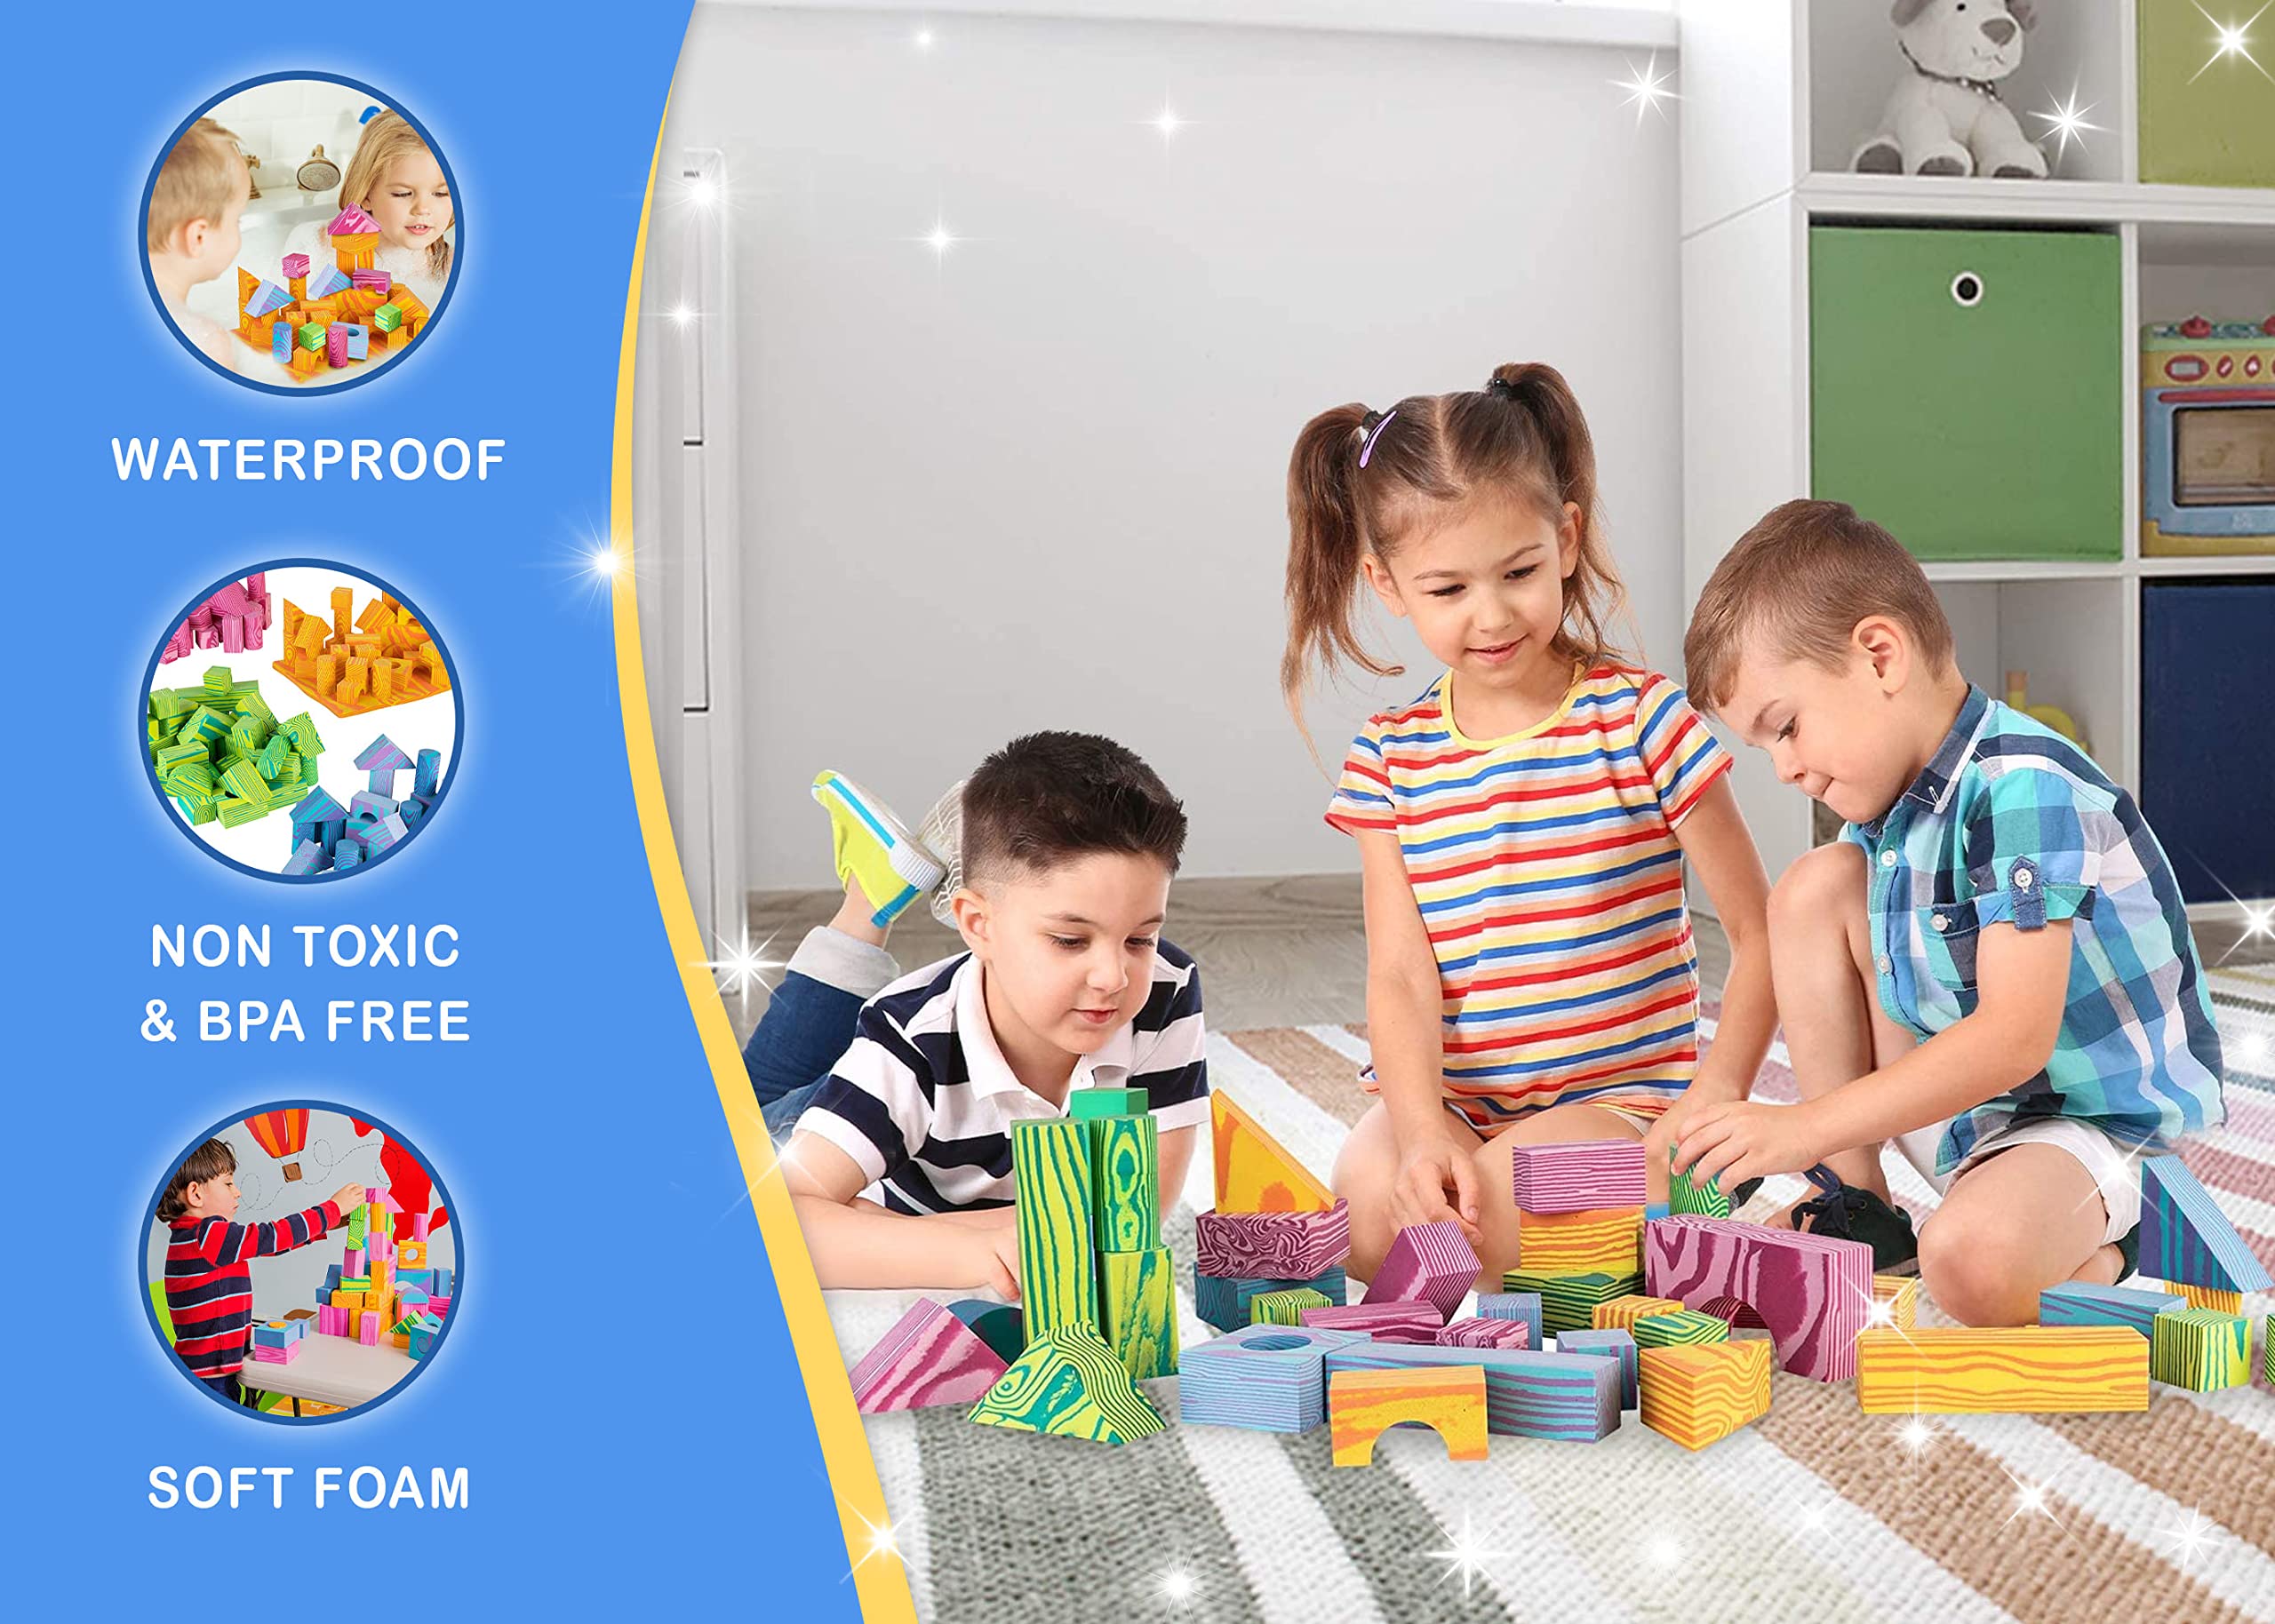 Morvat 60 Piece Colorful Soft EVA Foam Building Blocks Set, Waterproof Play Toy for Children Babies Toddlers & Kids, Boys & Girls Gift, Non Toxic & BPA Free, Bath Tub Platform, Carry & Dry Bag